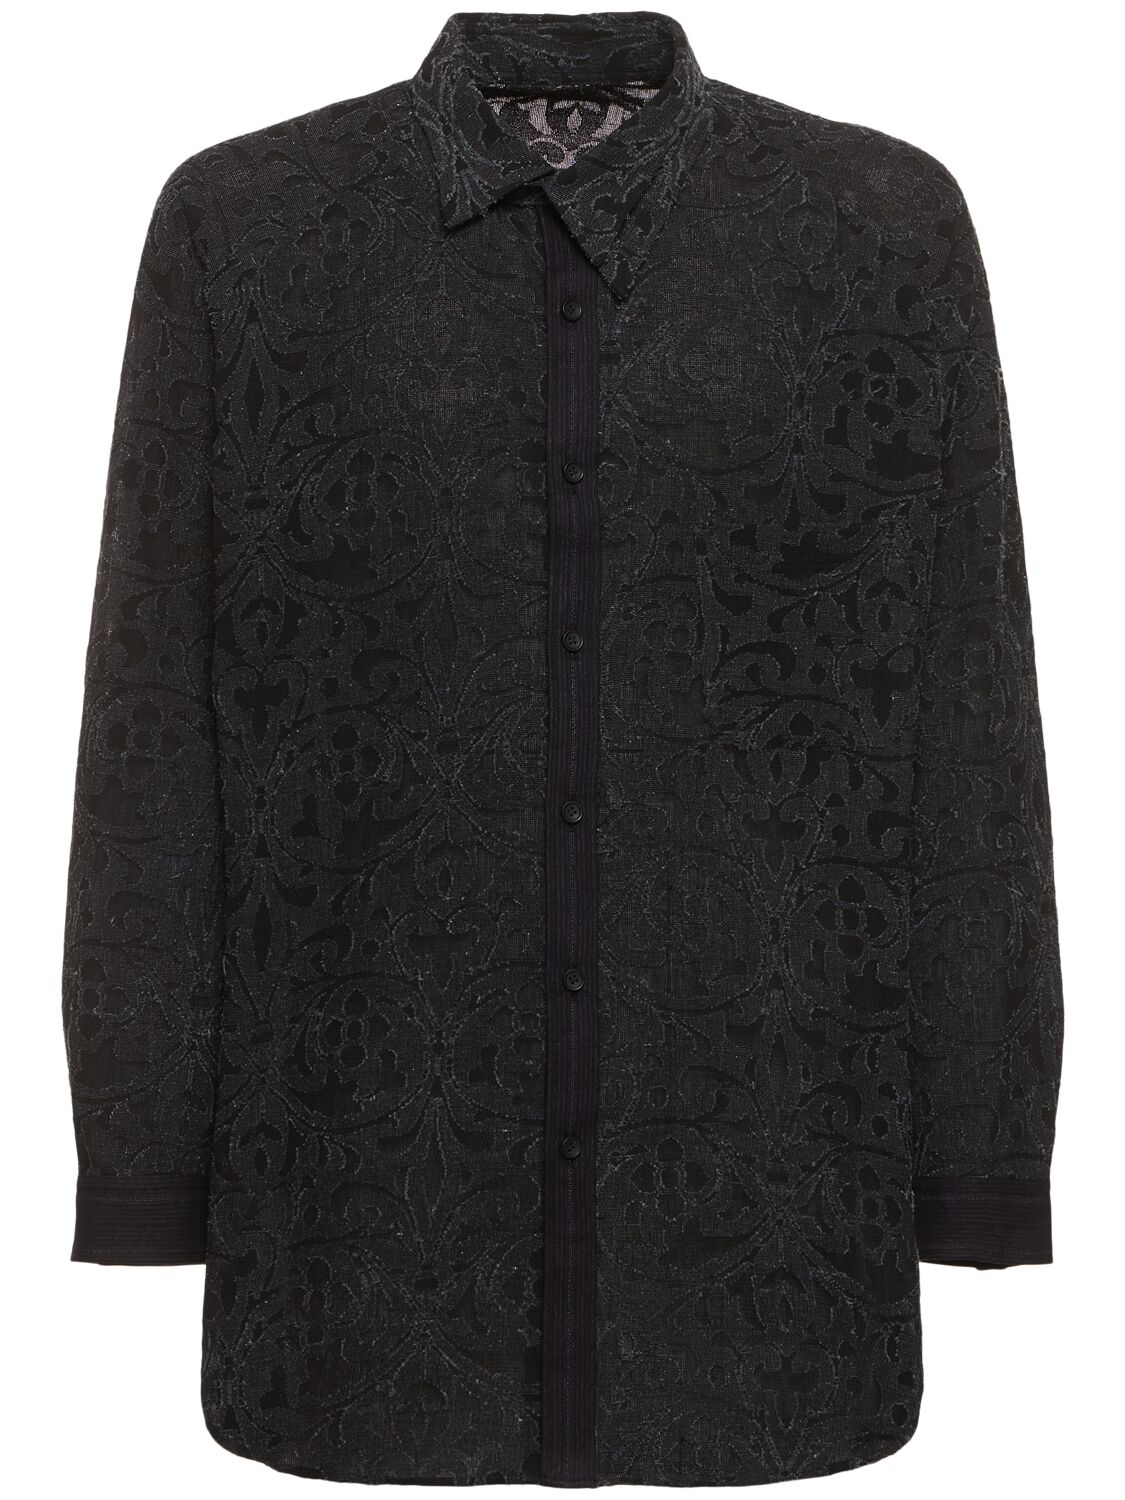 Yohji Yamamoto A-jq Cotton Blend Shirt In Black